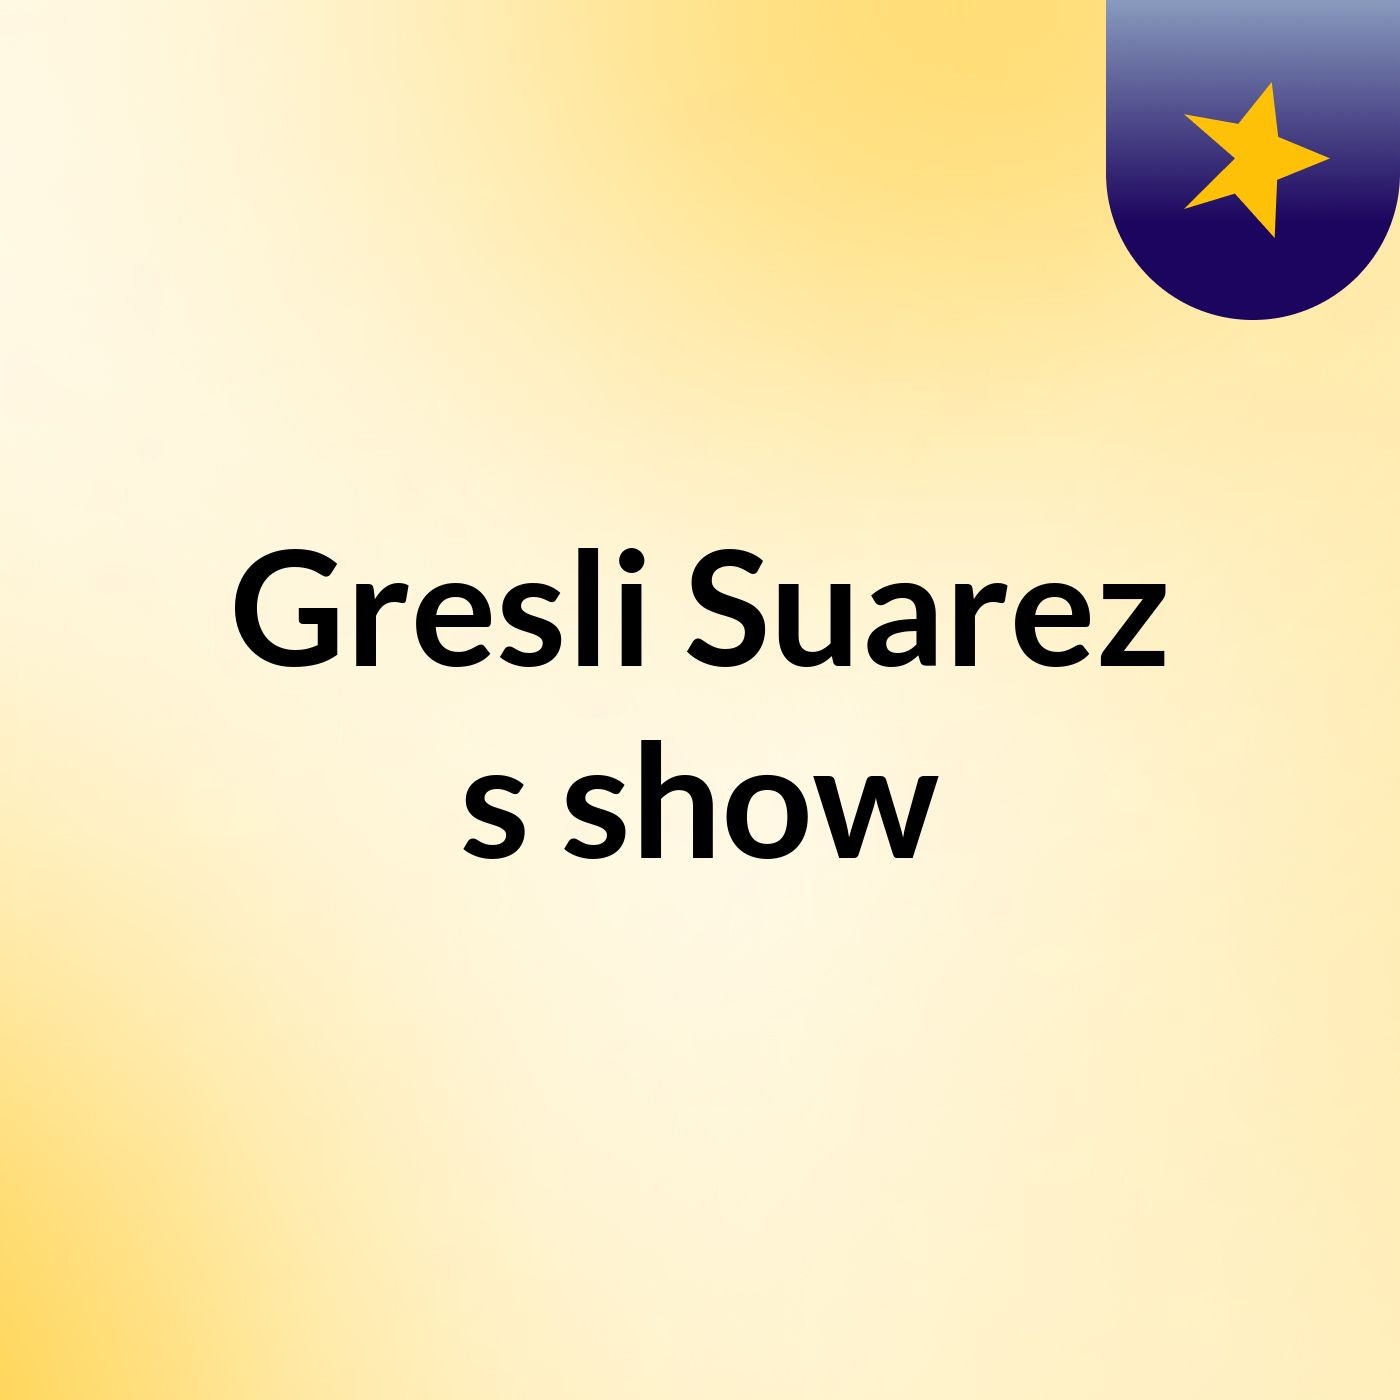 Gresli Suarez's show